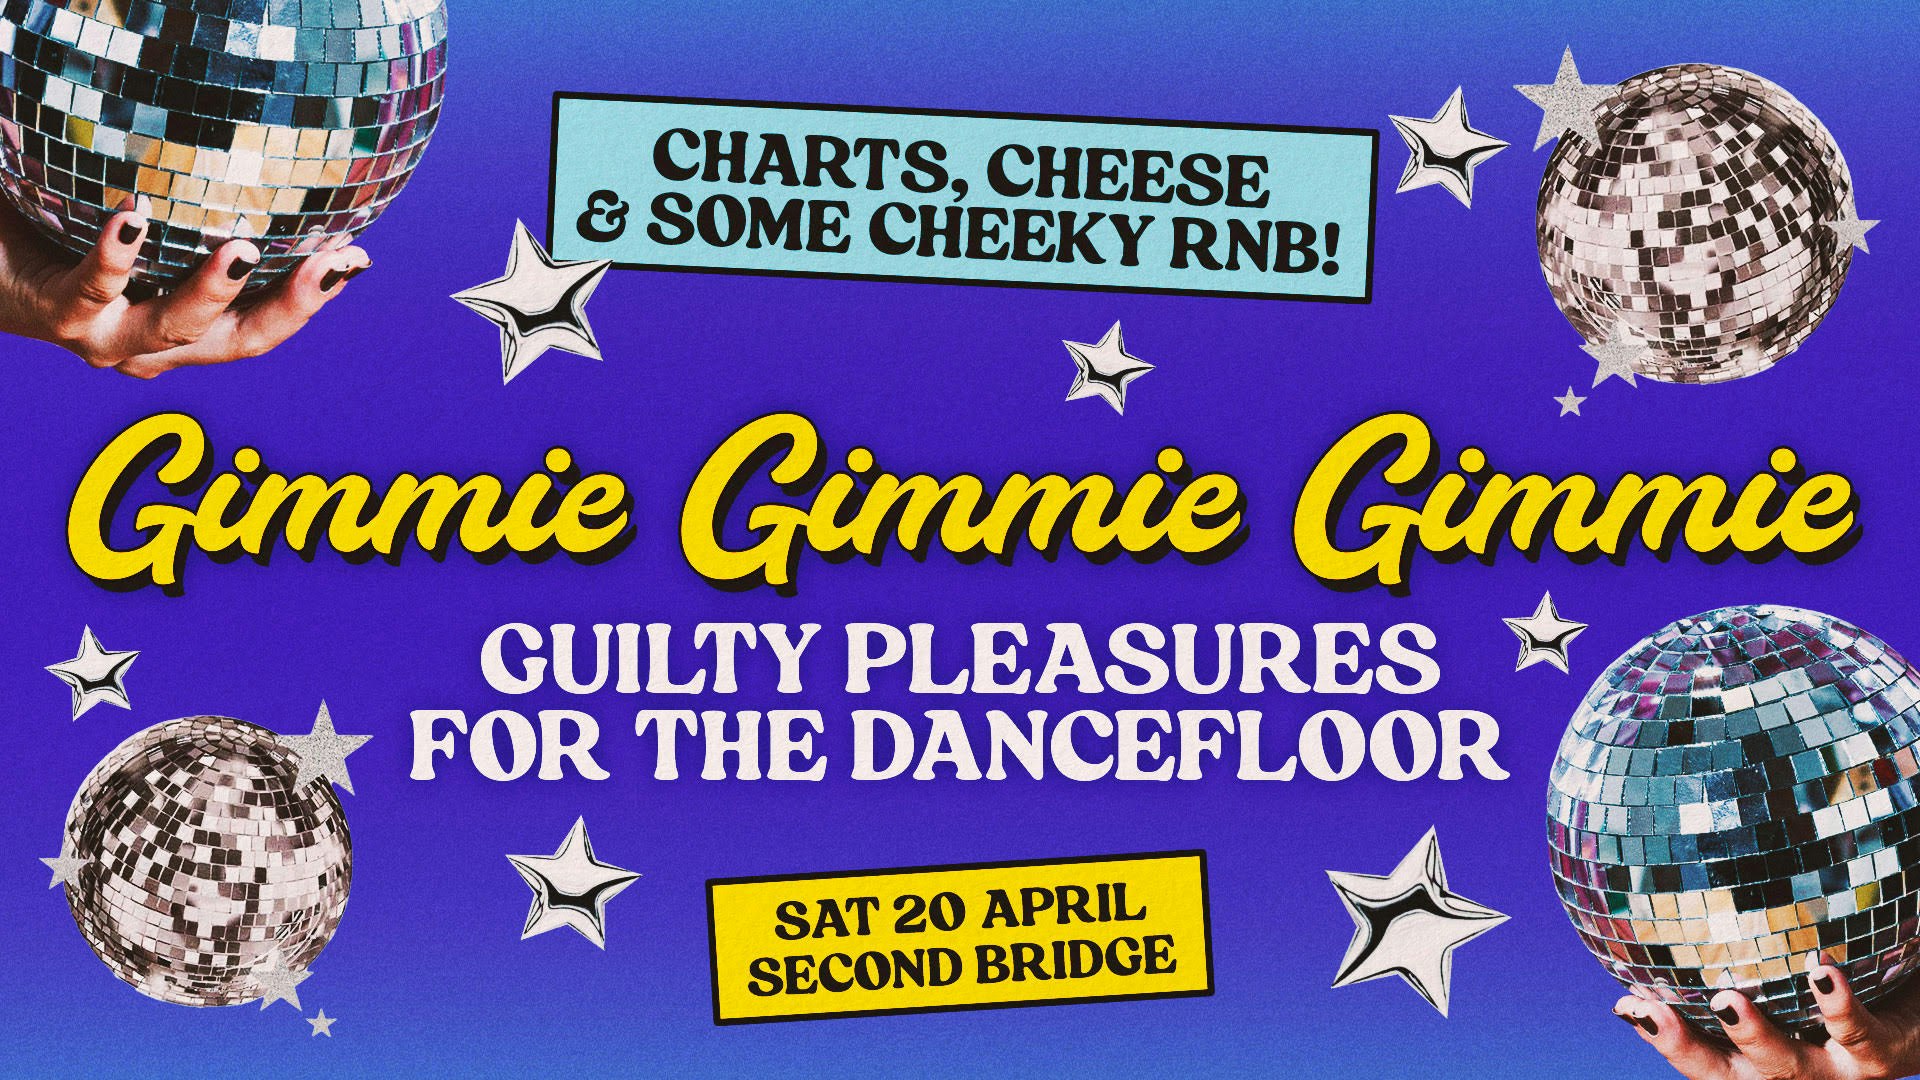 Gimmie Gimmie Gimmie: Guilty Dancefloor Pleasures [Charts, Cheese, RnB]